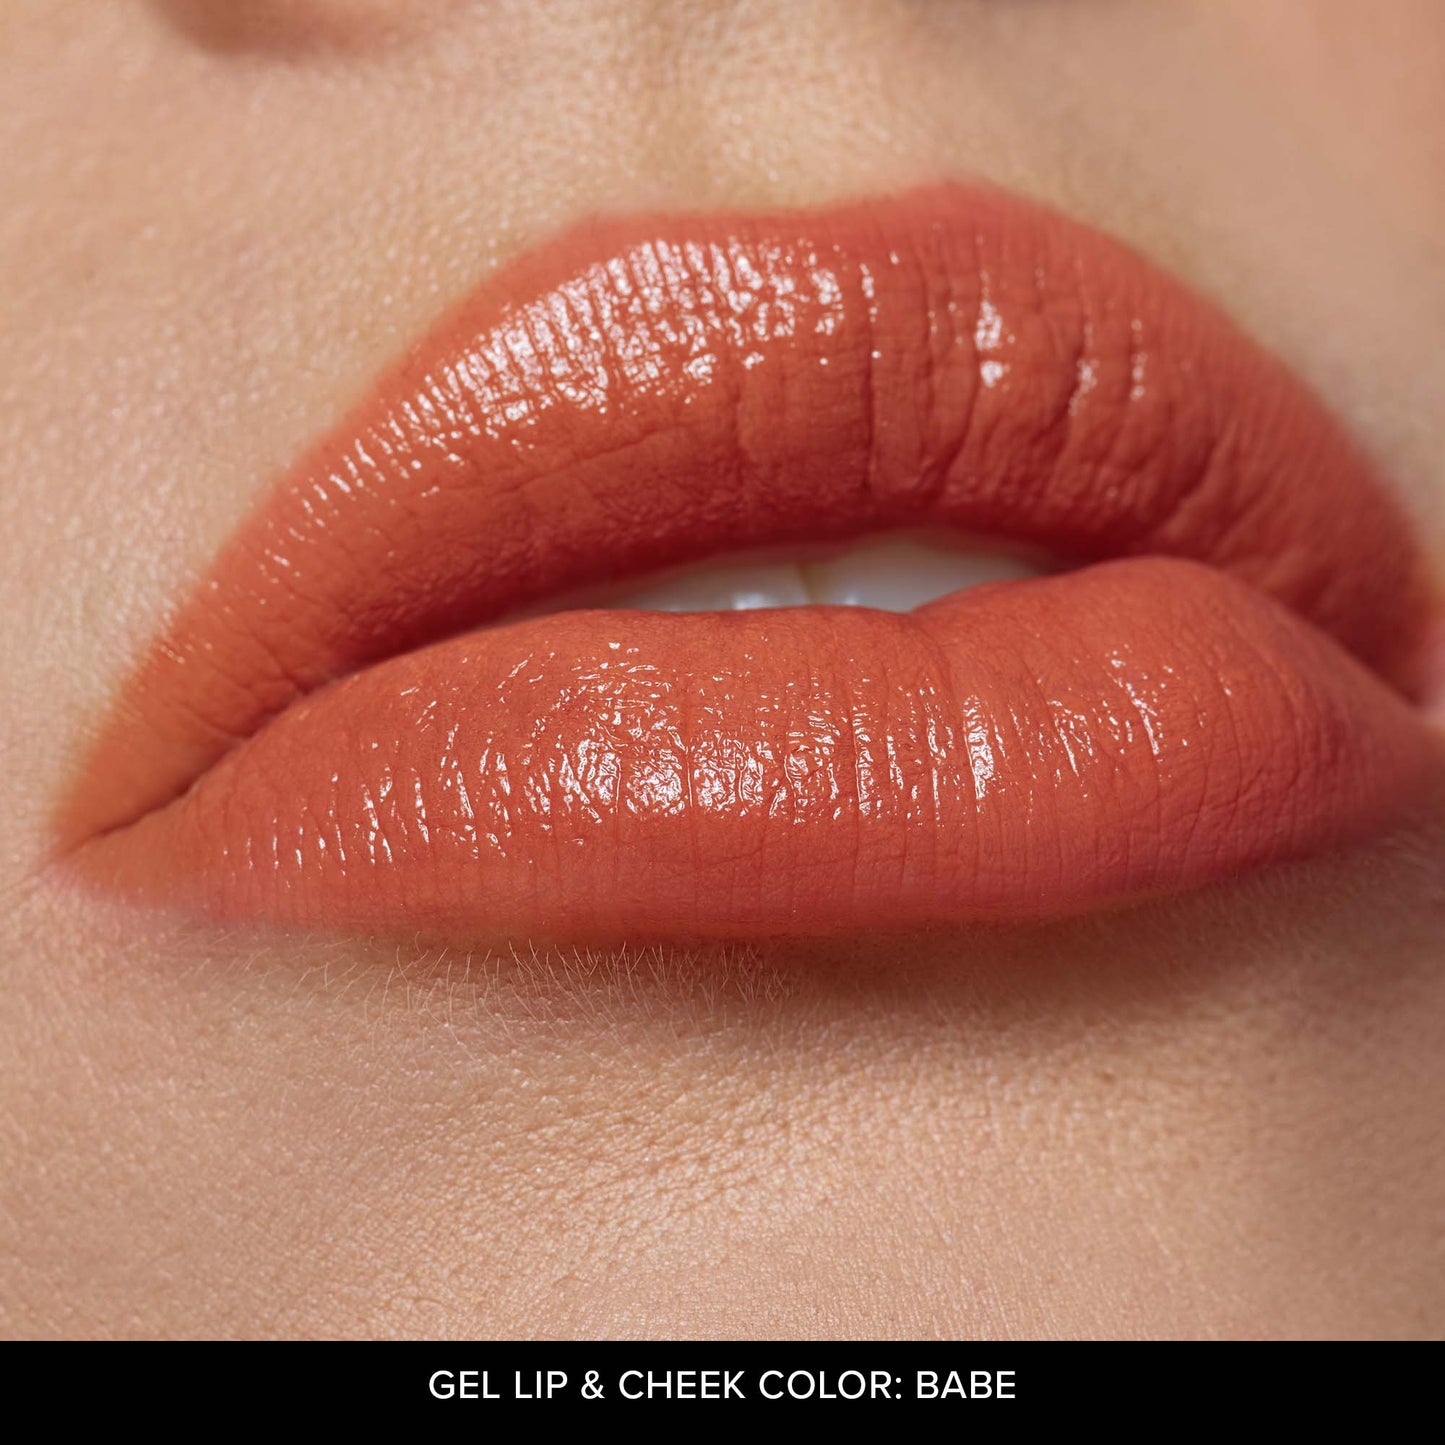 Close up of lips wearing Gel Lip & Cheek in shade Babe-4